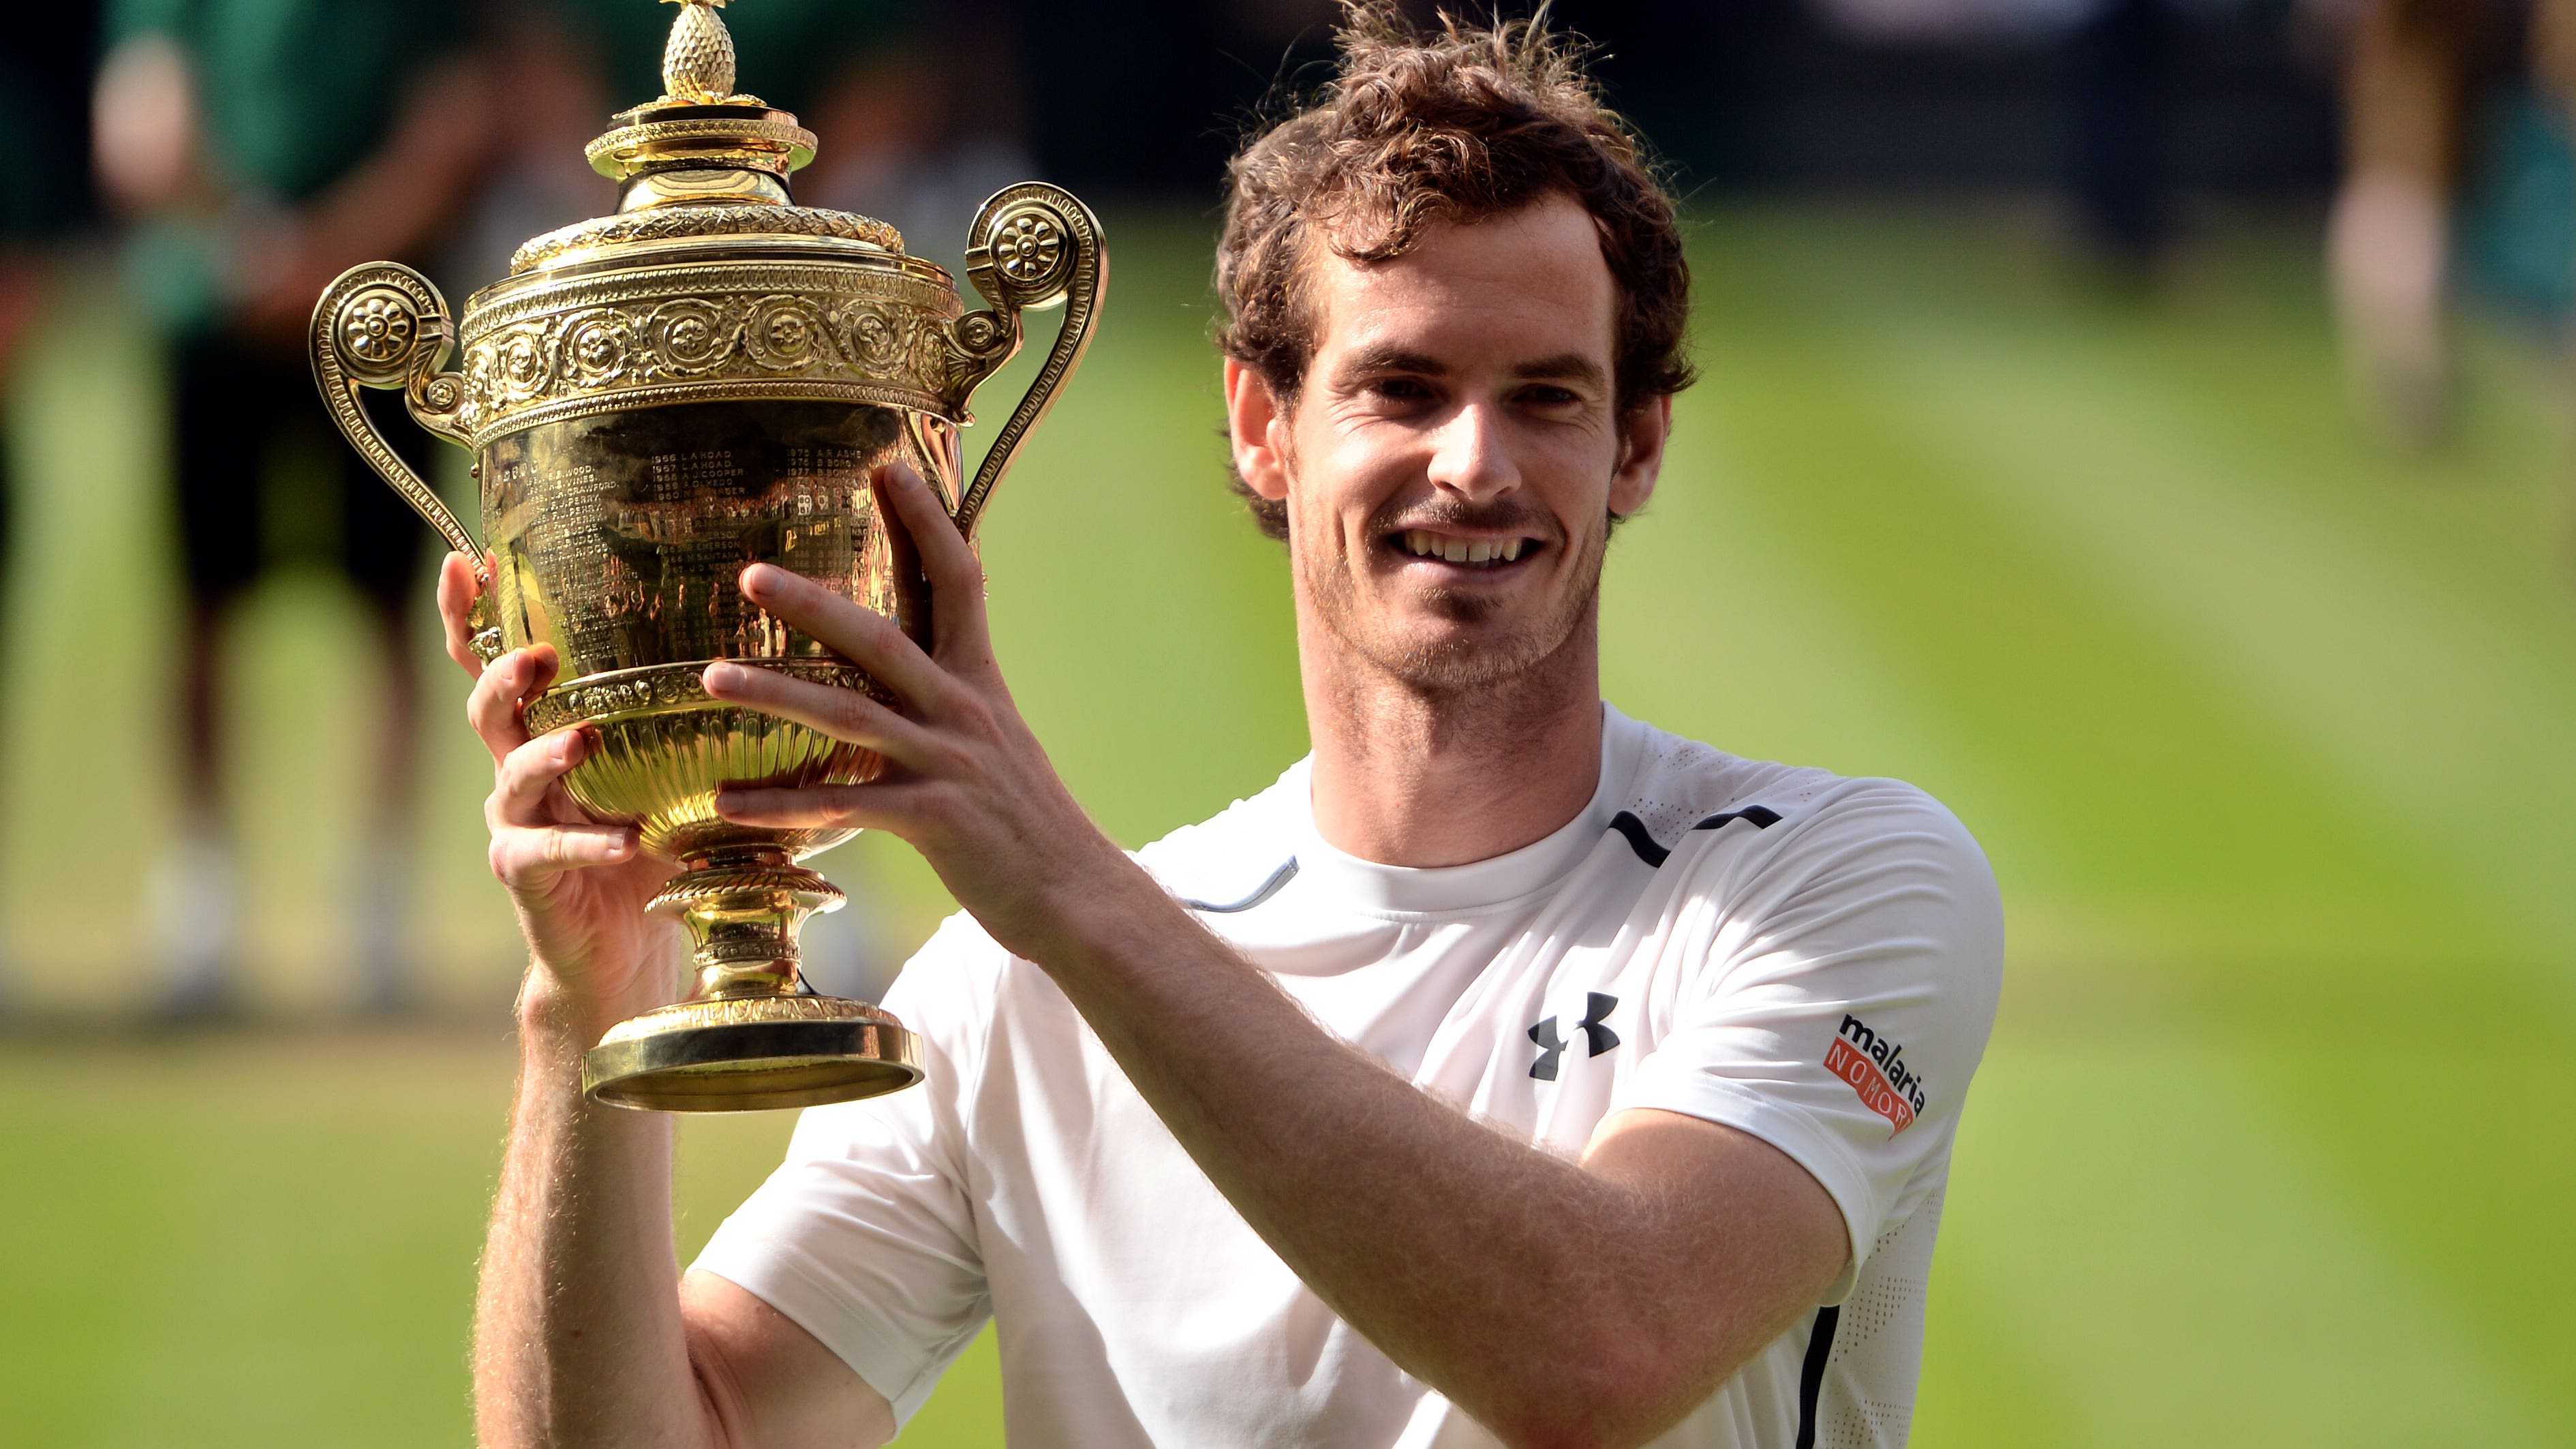 Andy Murray denied one last Wimbledon singles run – but legacy assured long ago